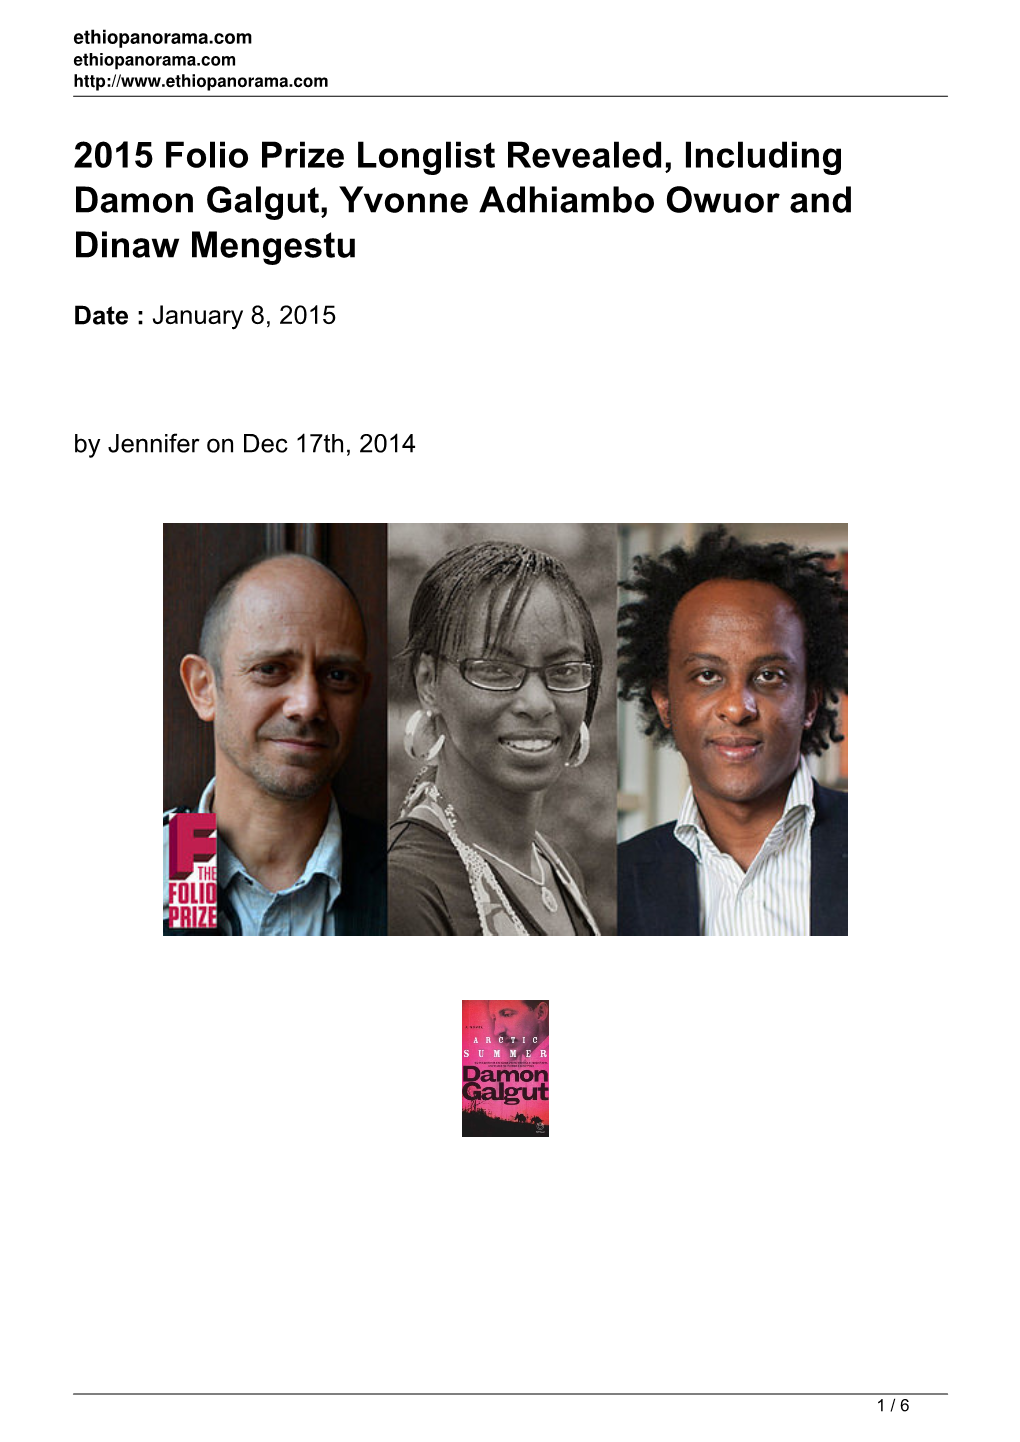 2015 Folio Prize Longlist Revealed, Including Damon Galgut, Yvonne Adhiambo Owuor and Dinaw Mengestu